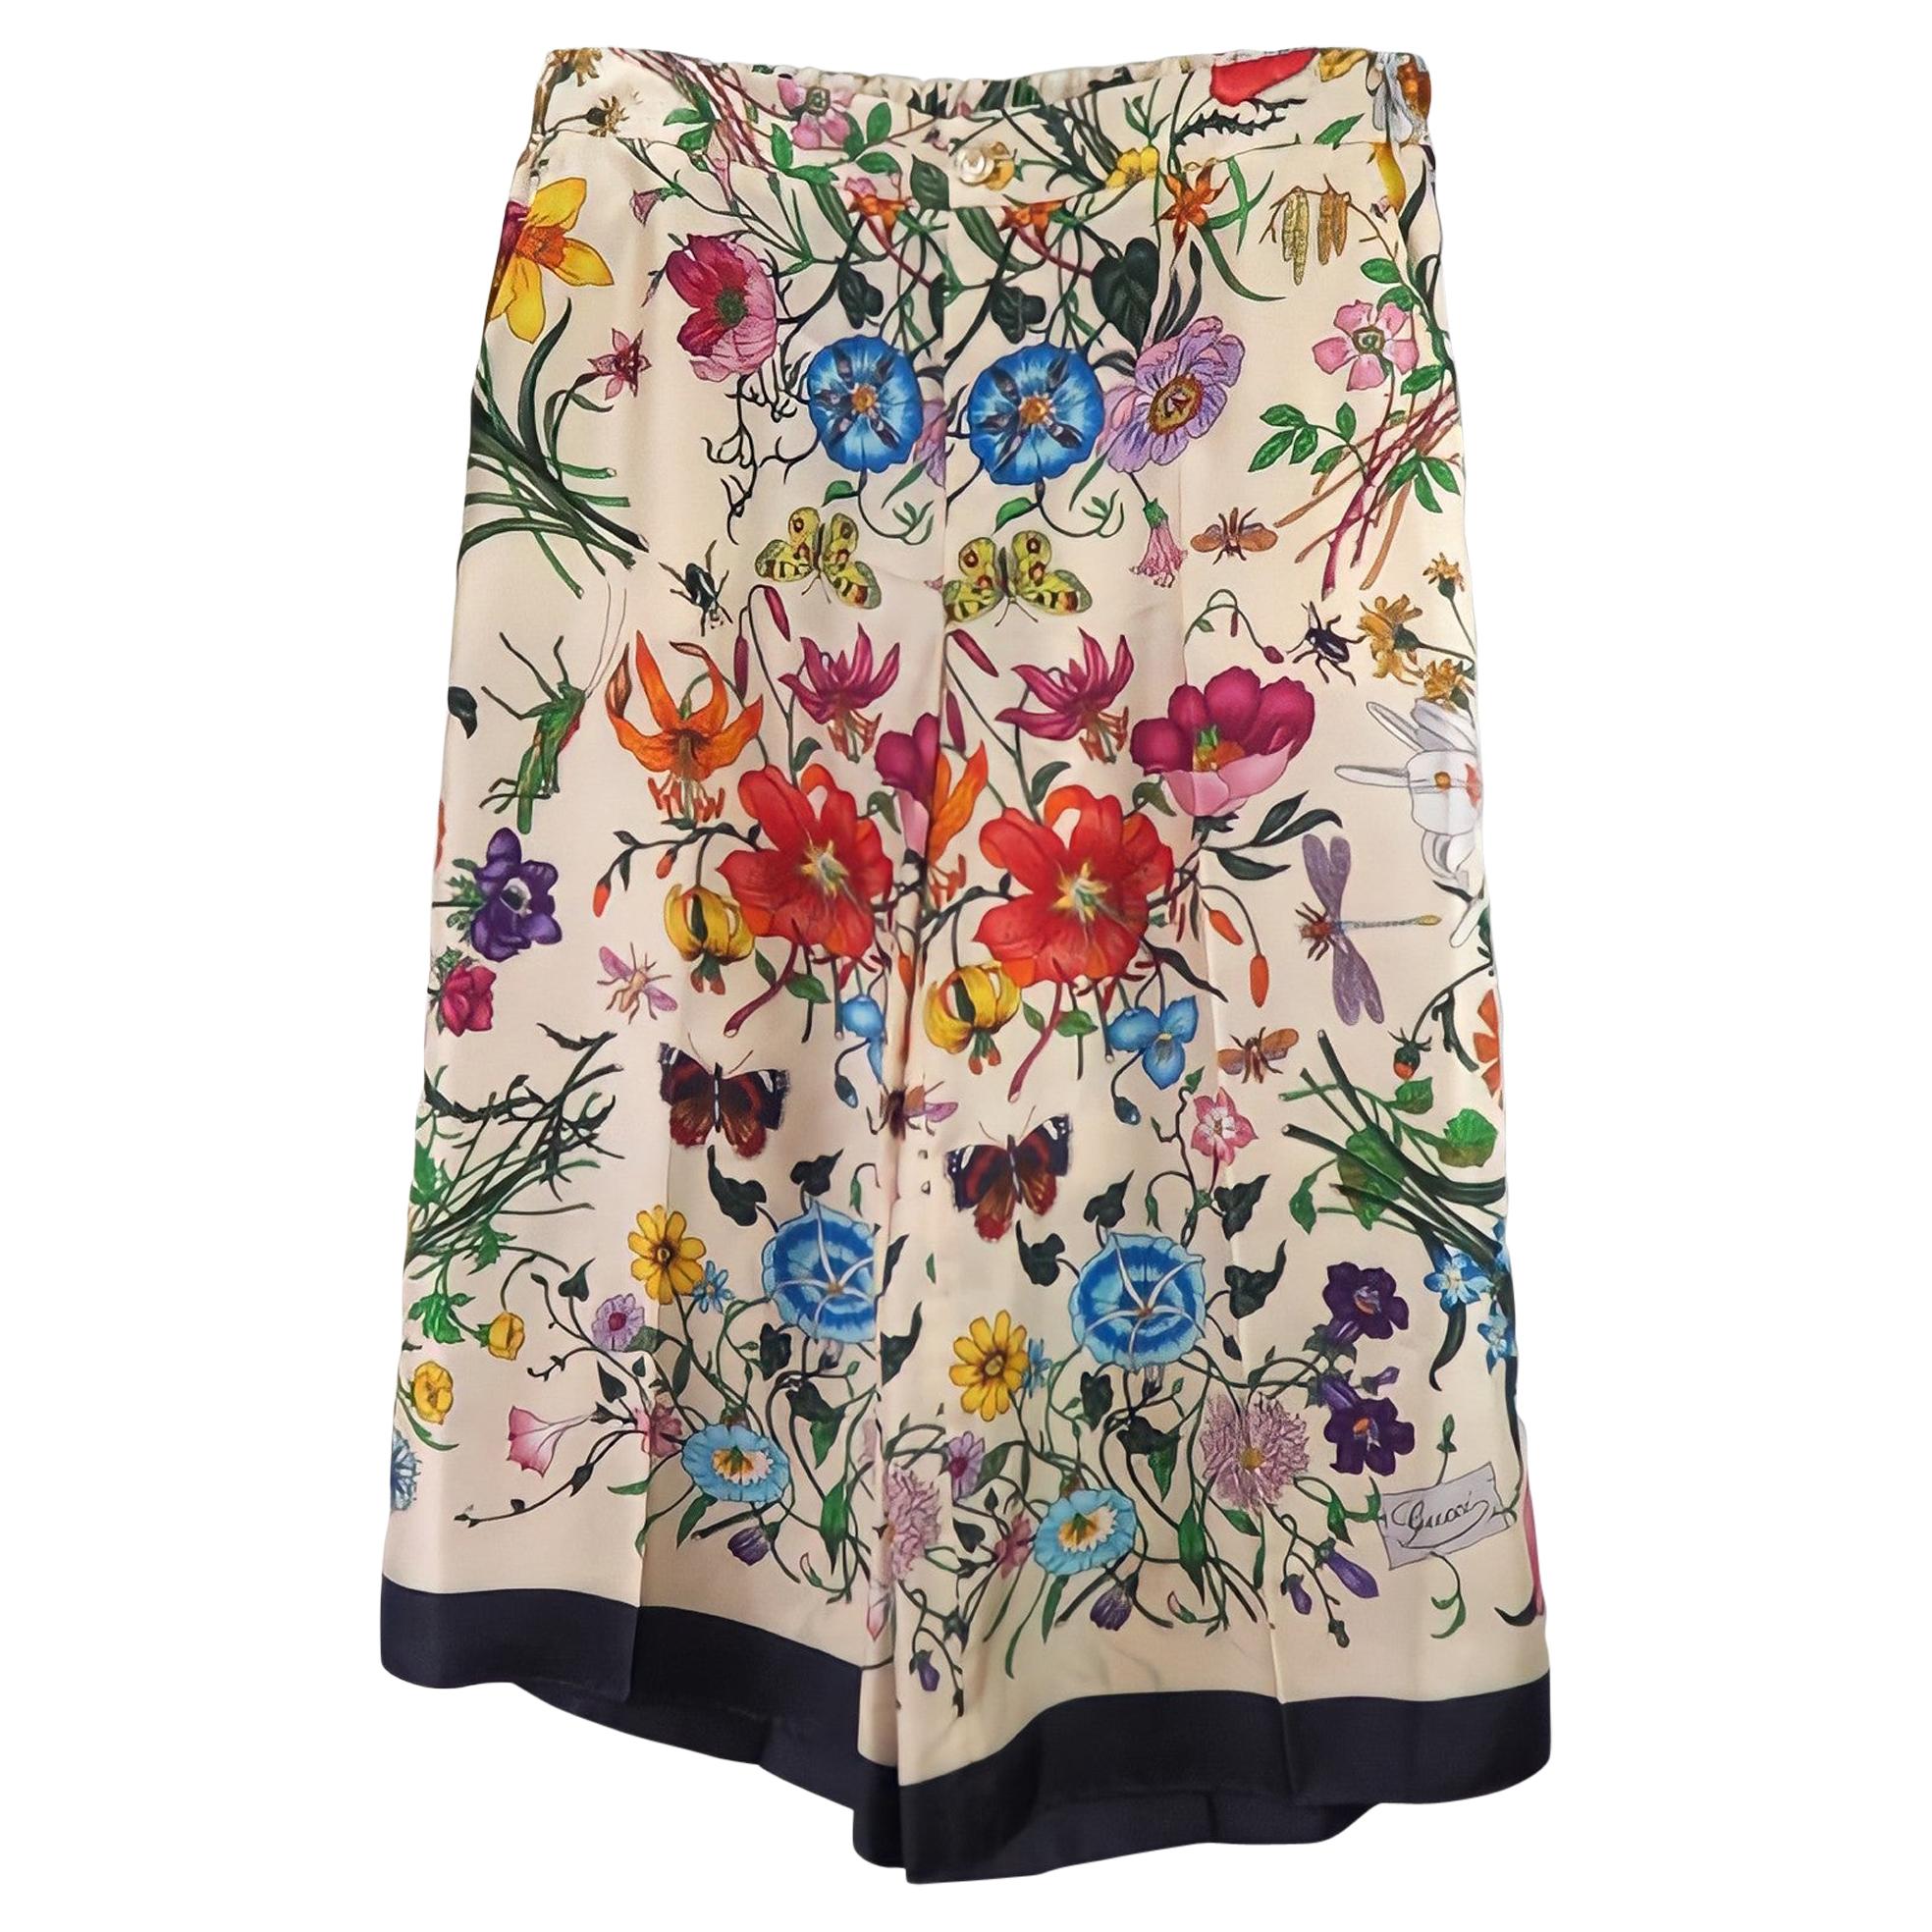 Gucci Floral Foulard on Twill Pants - Size 44 (517265)